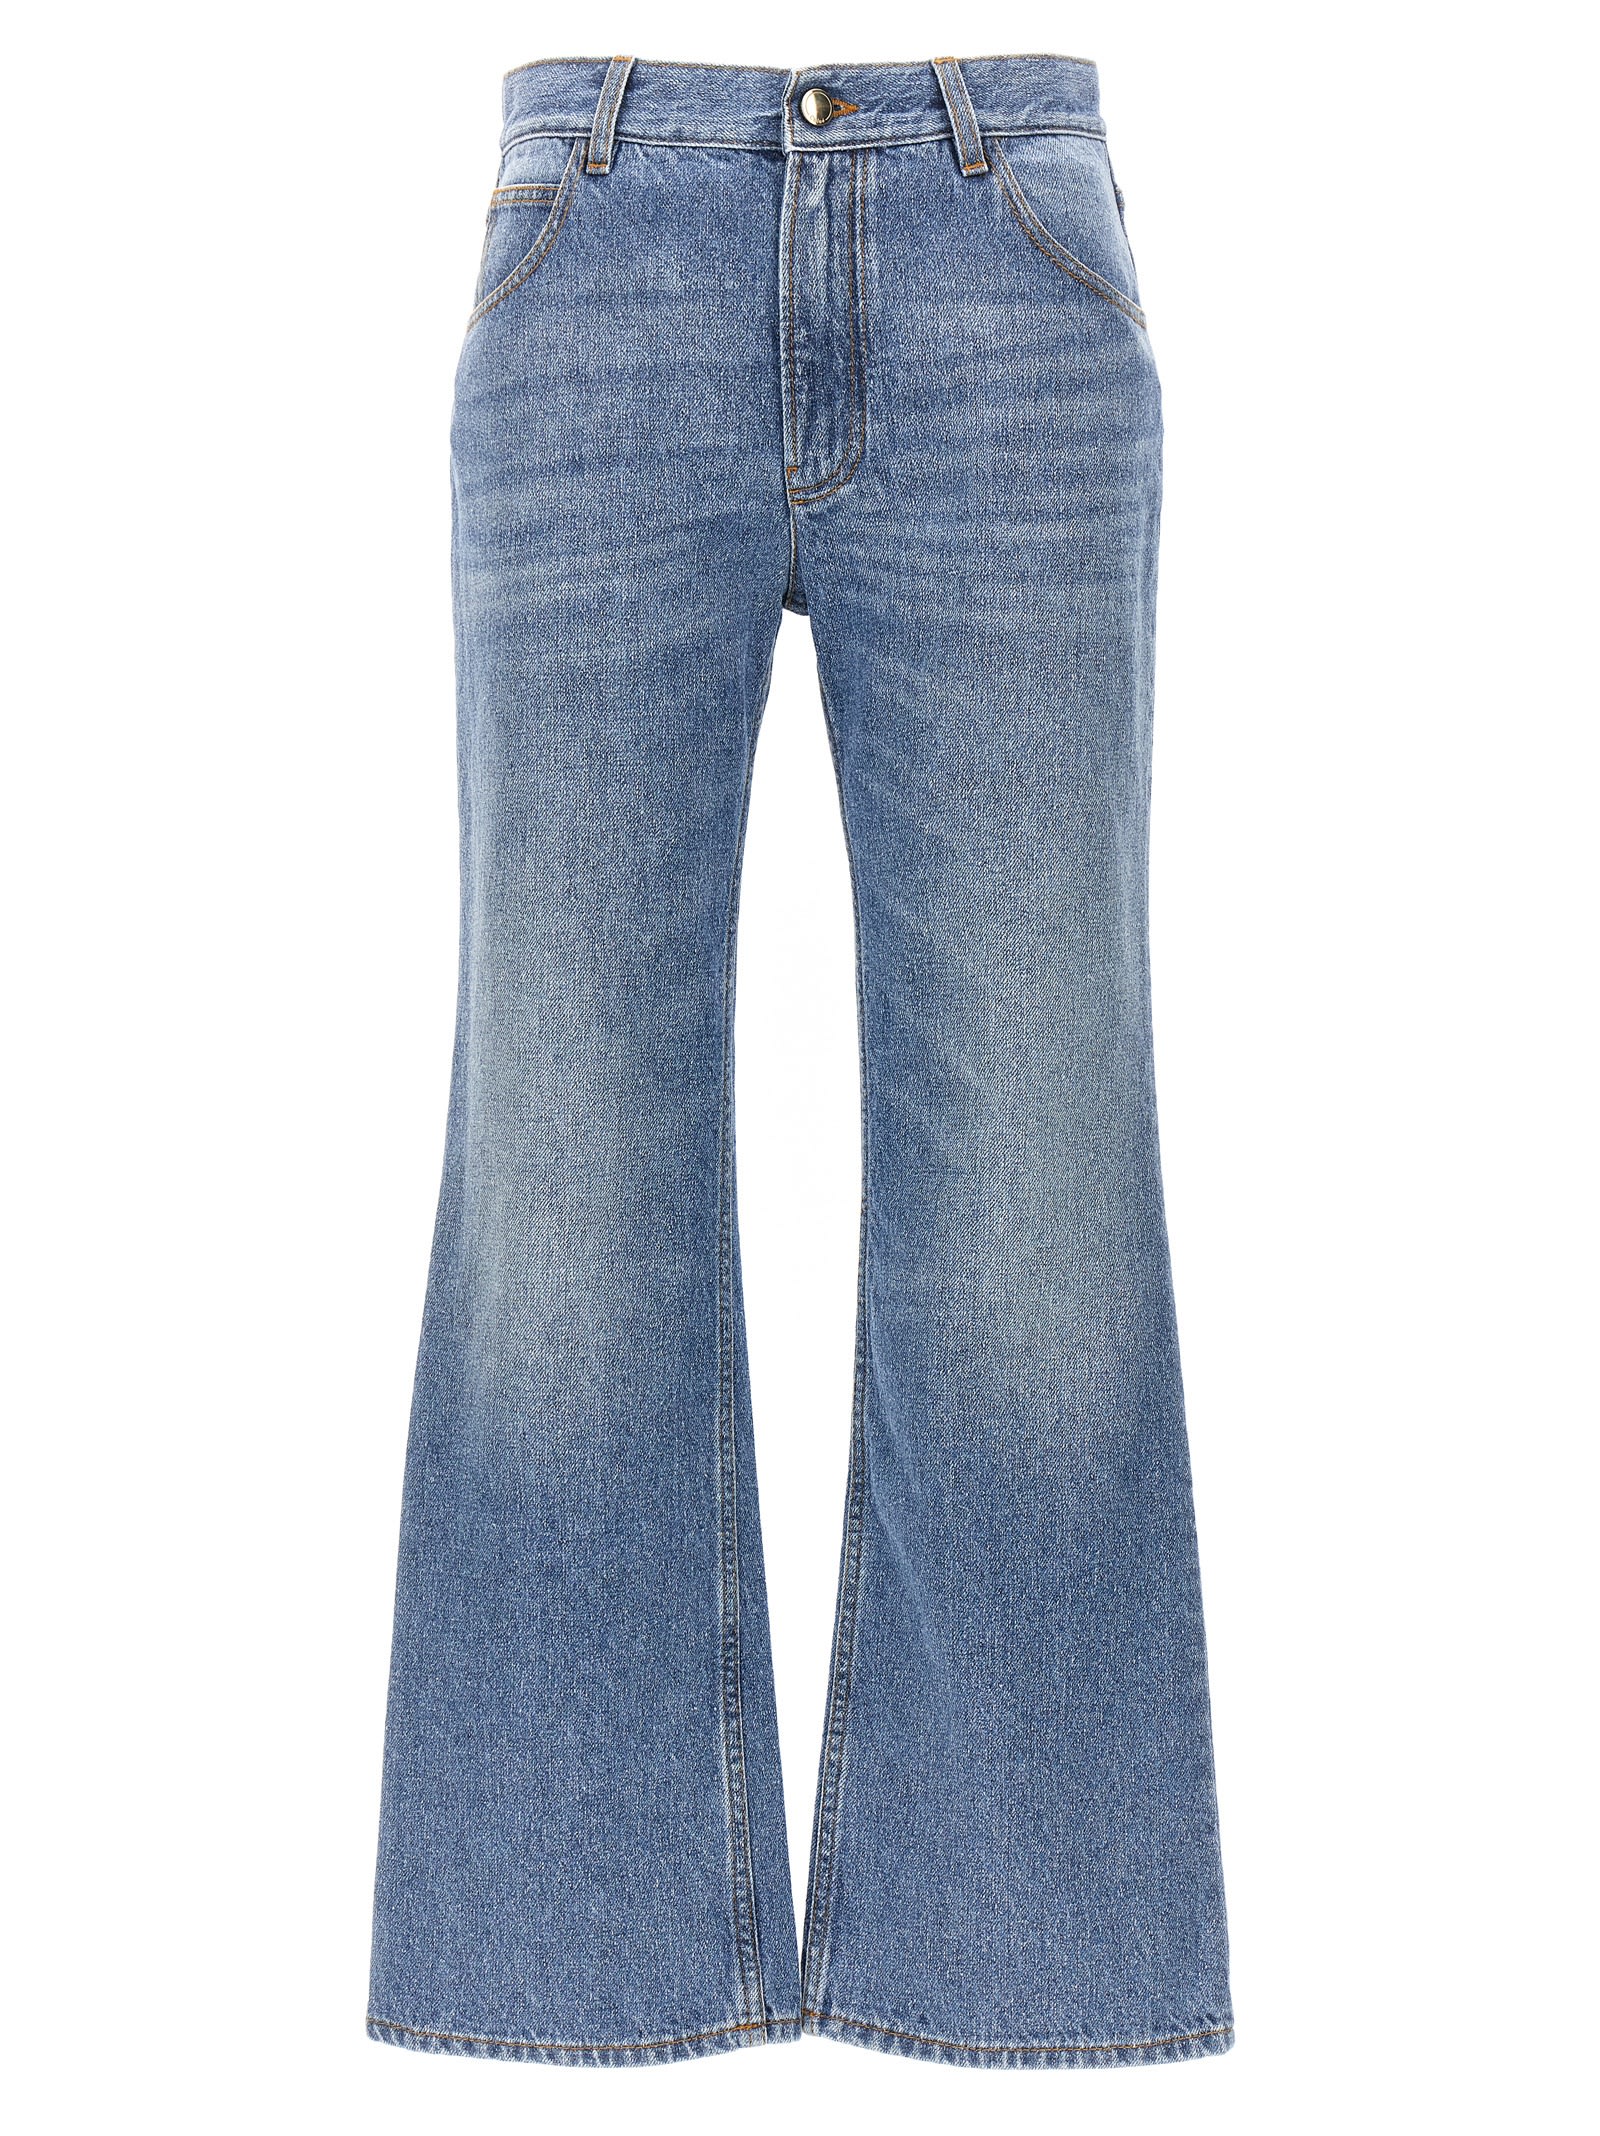 Chloé Denim Cropped Cut Jeans